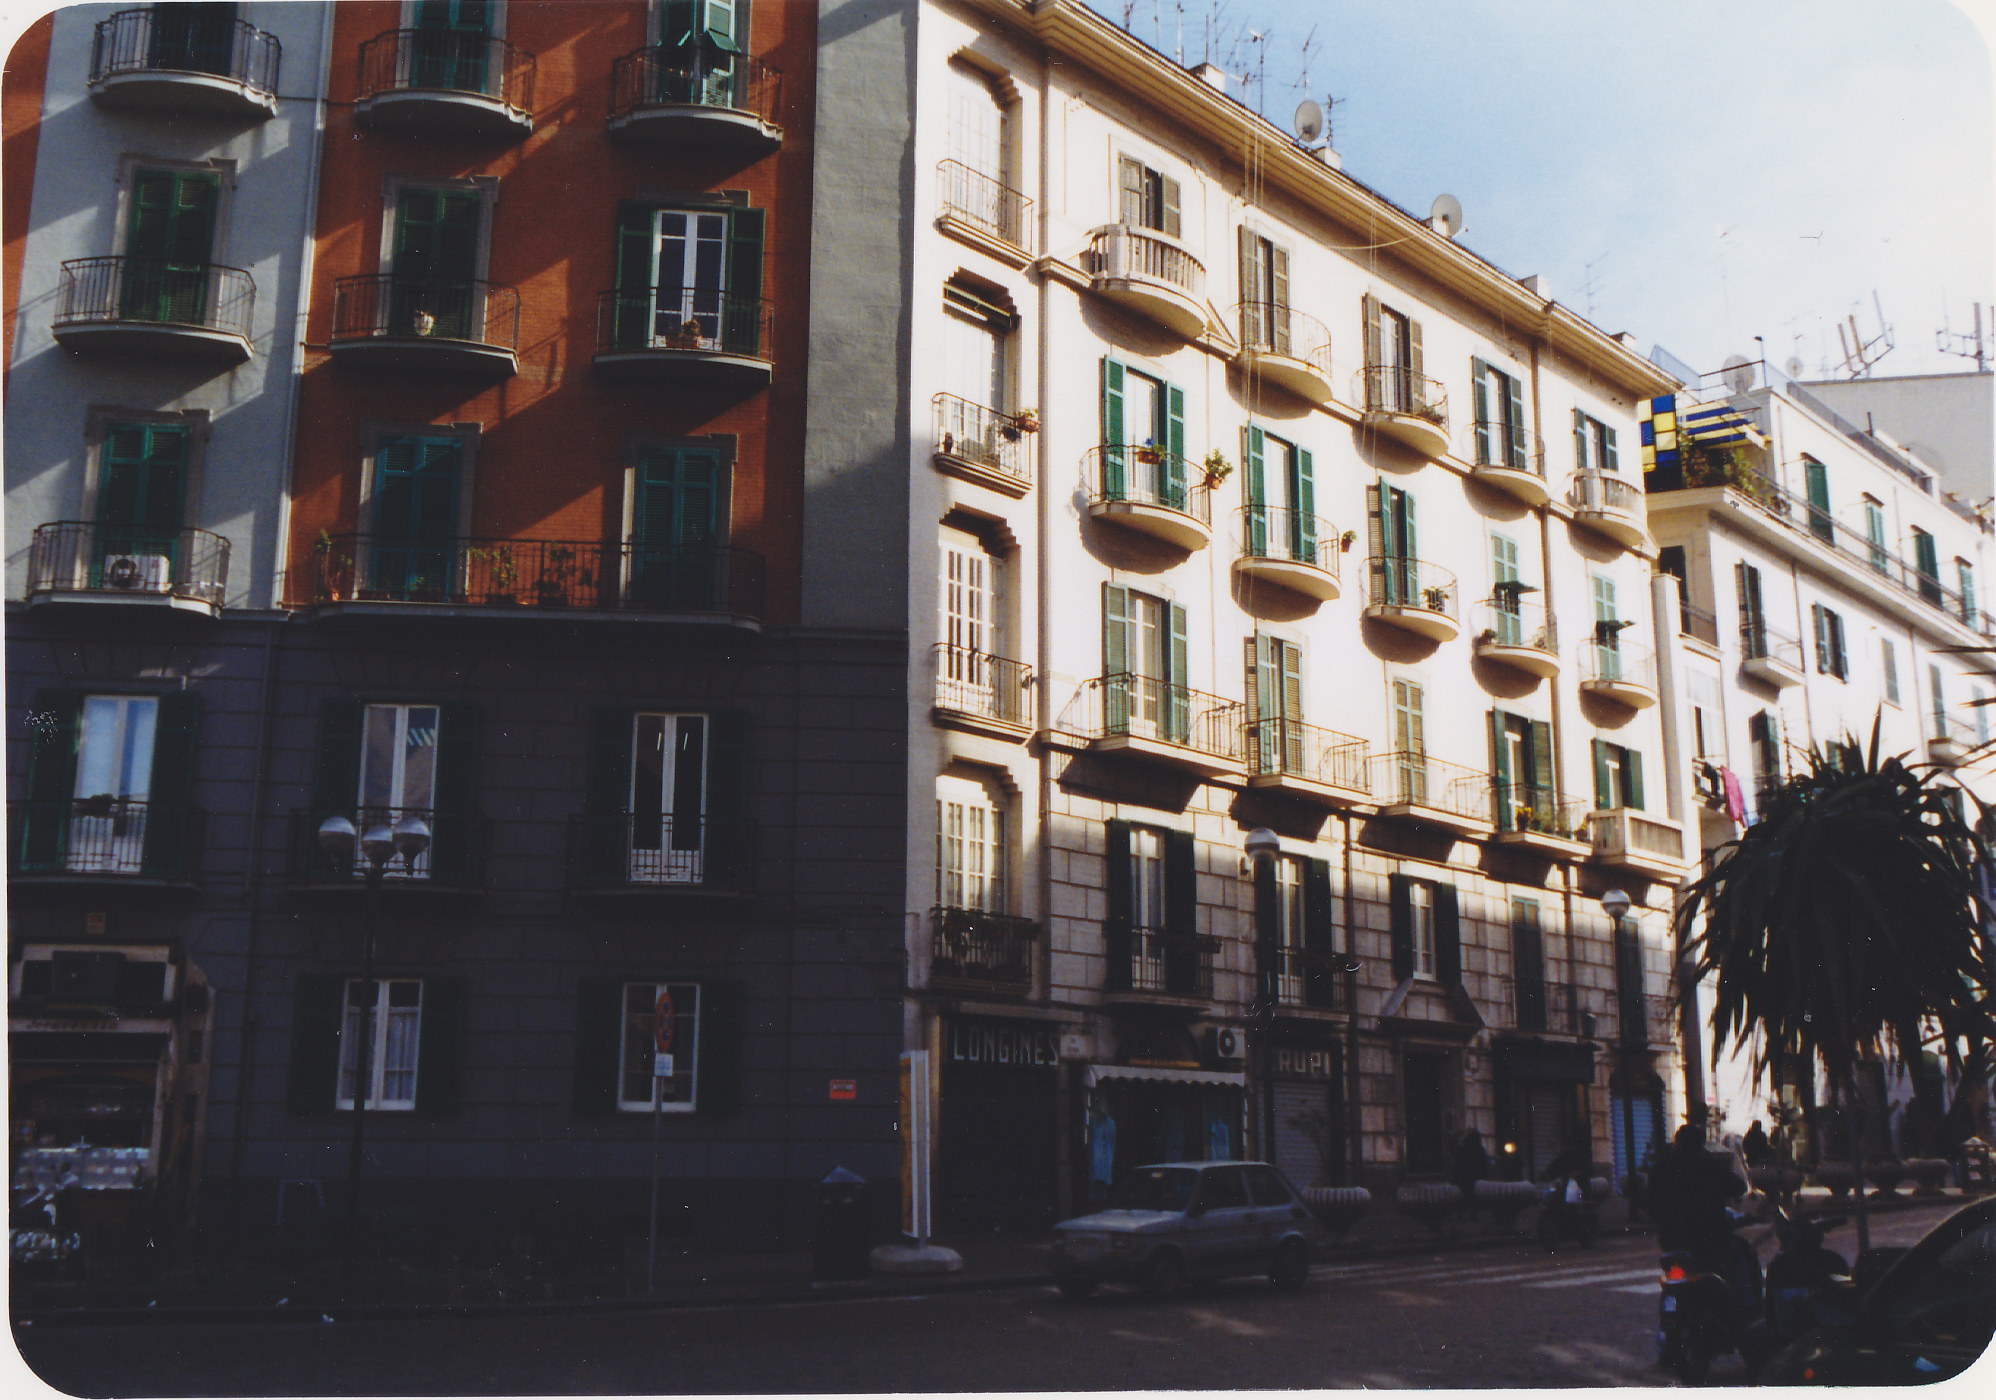 ignota - via Bernini, 104 (palazzo, residenziale) - Napoli (NA) 